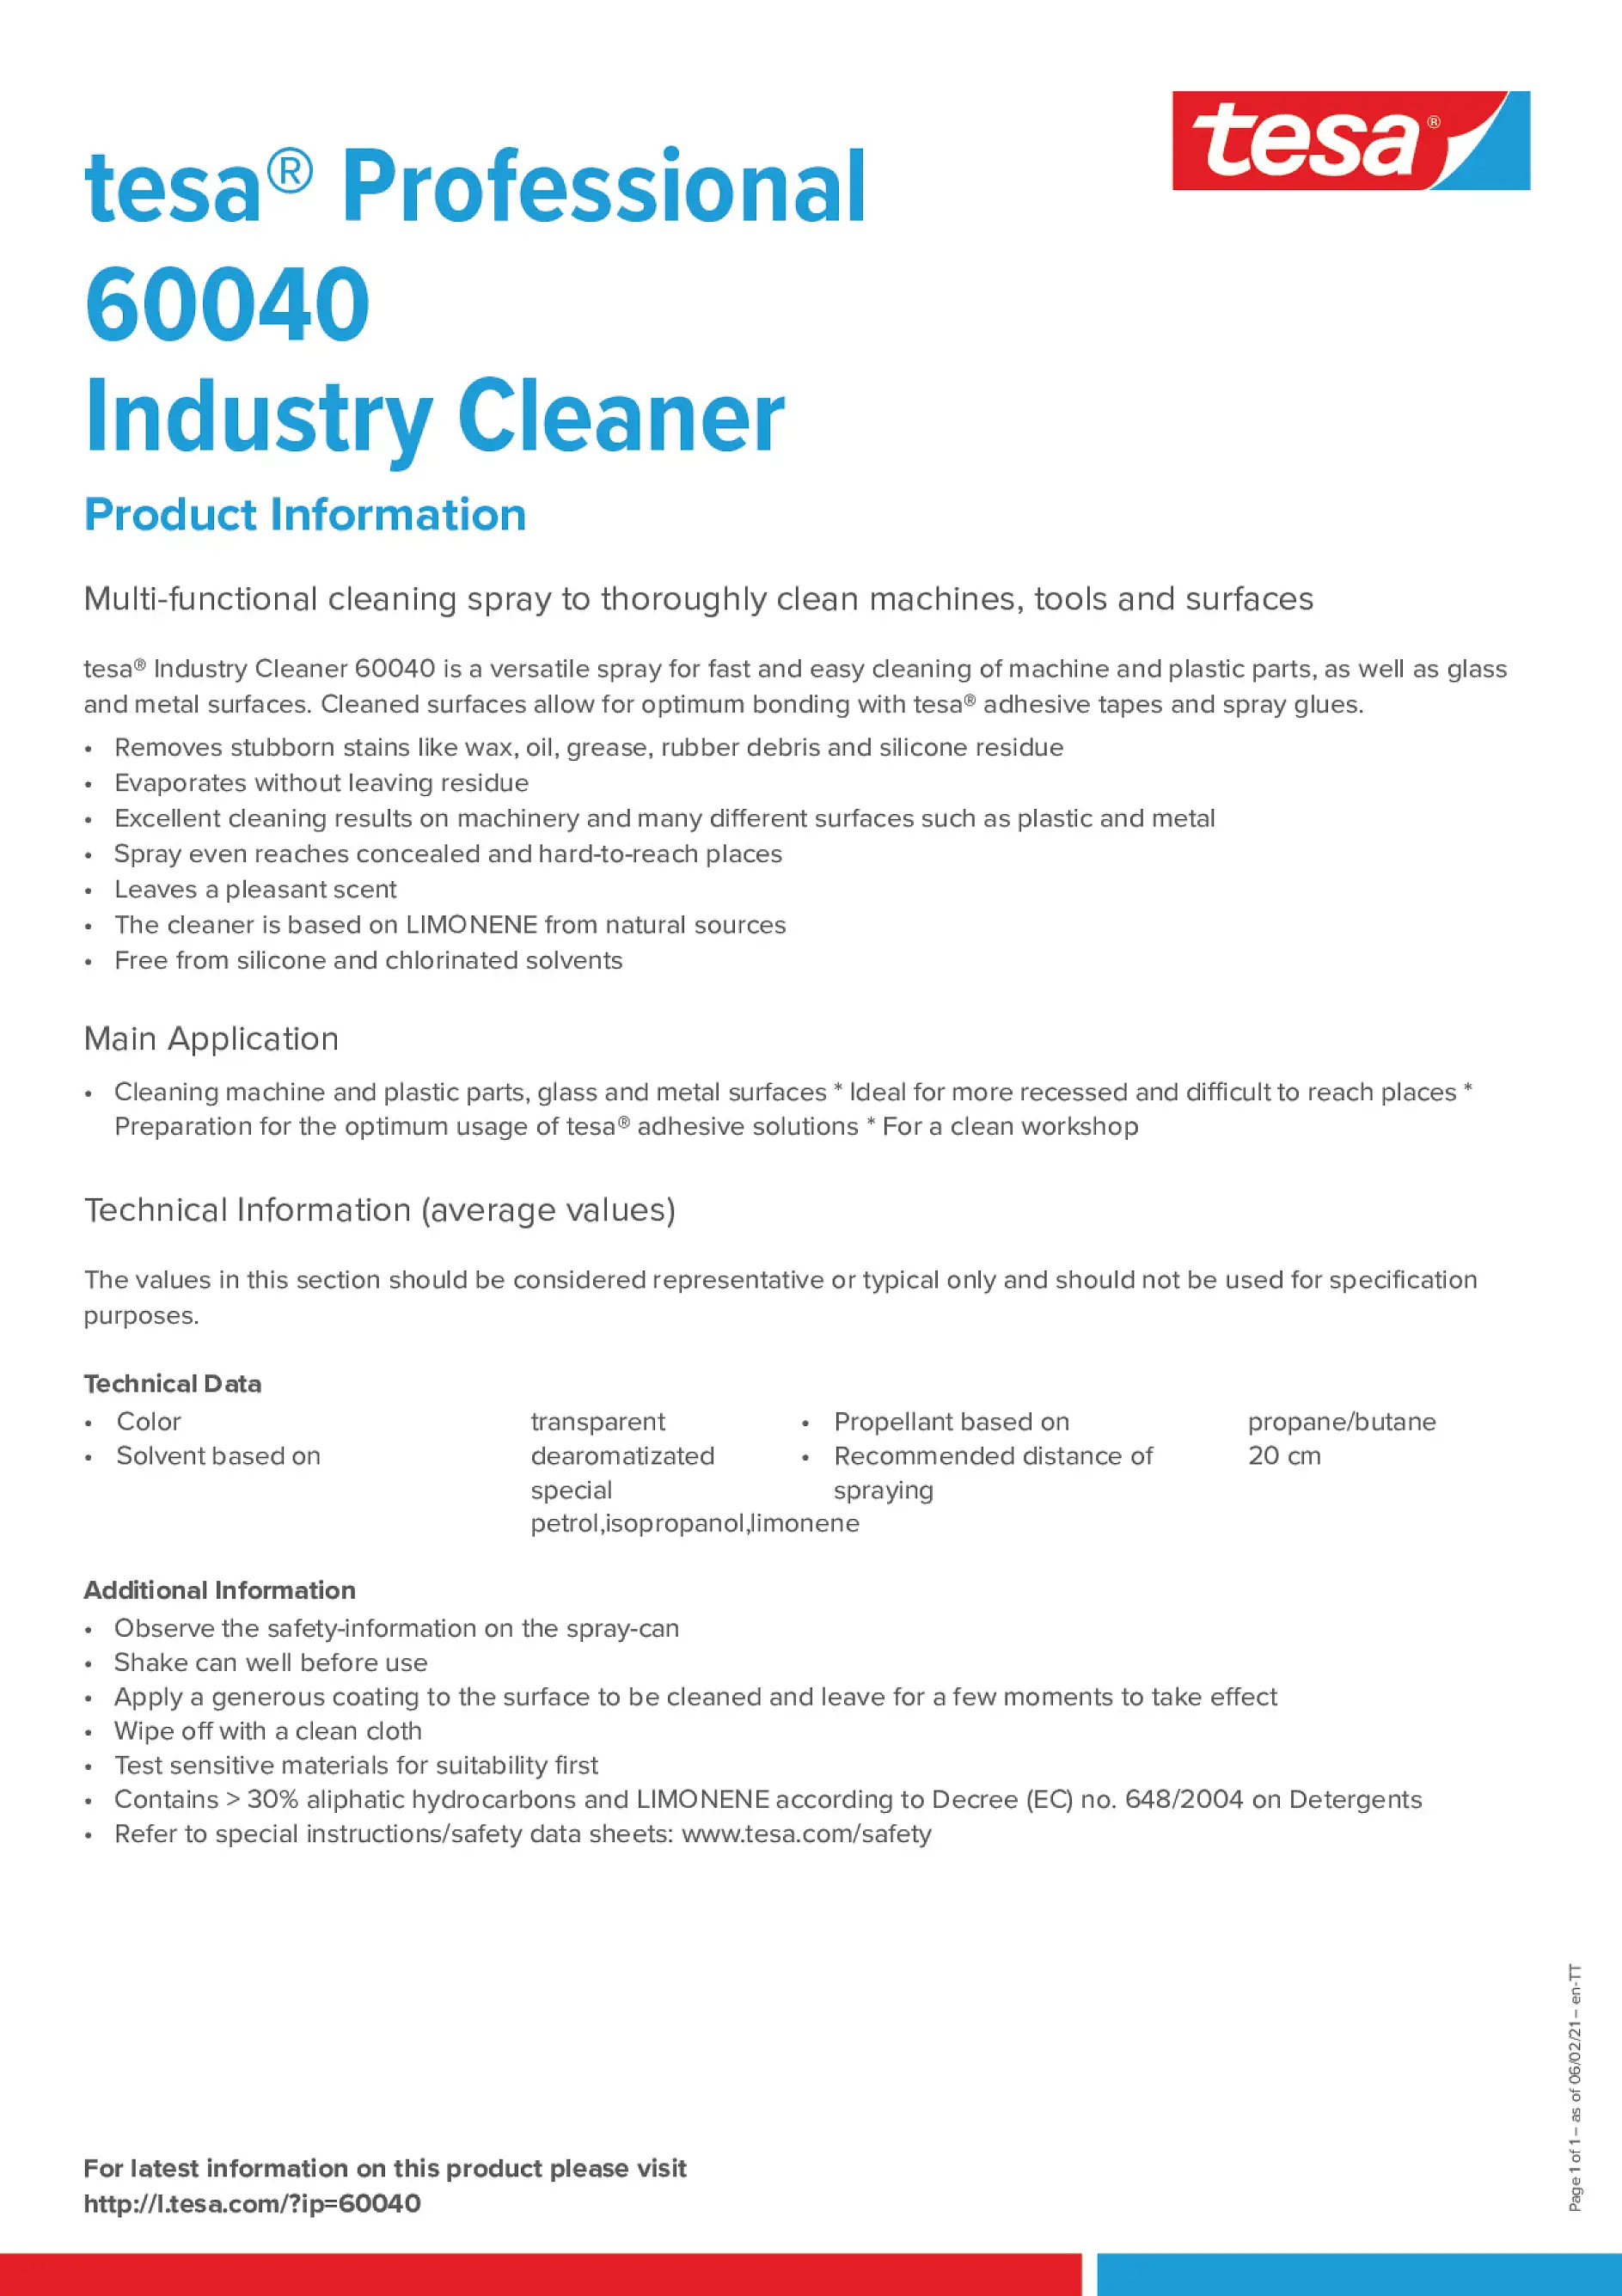 tesa_Professional_60040_Industry_Cleaner_en-TT